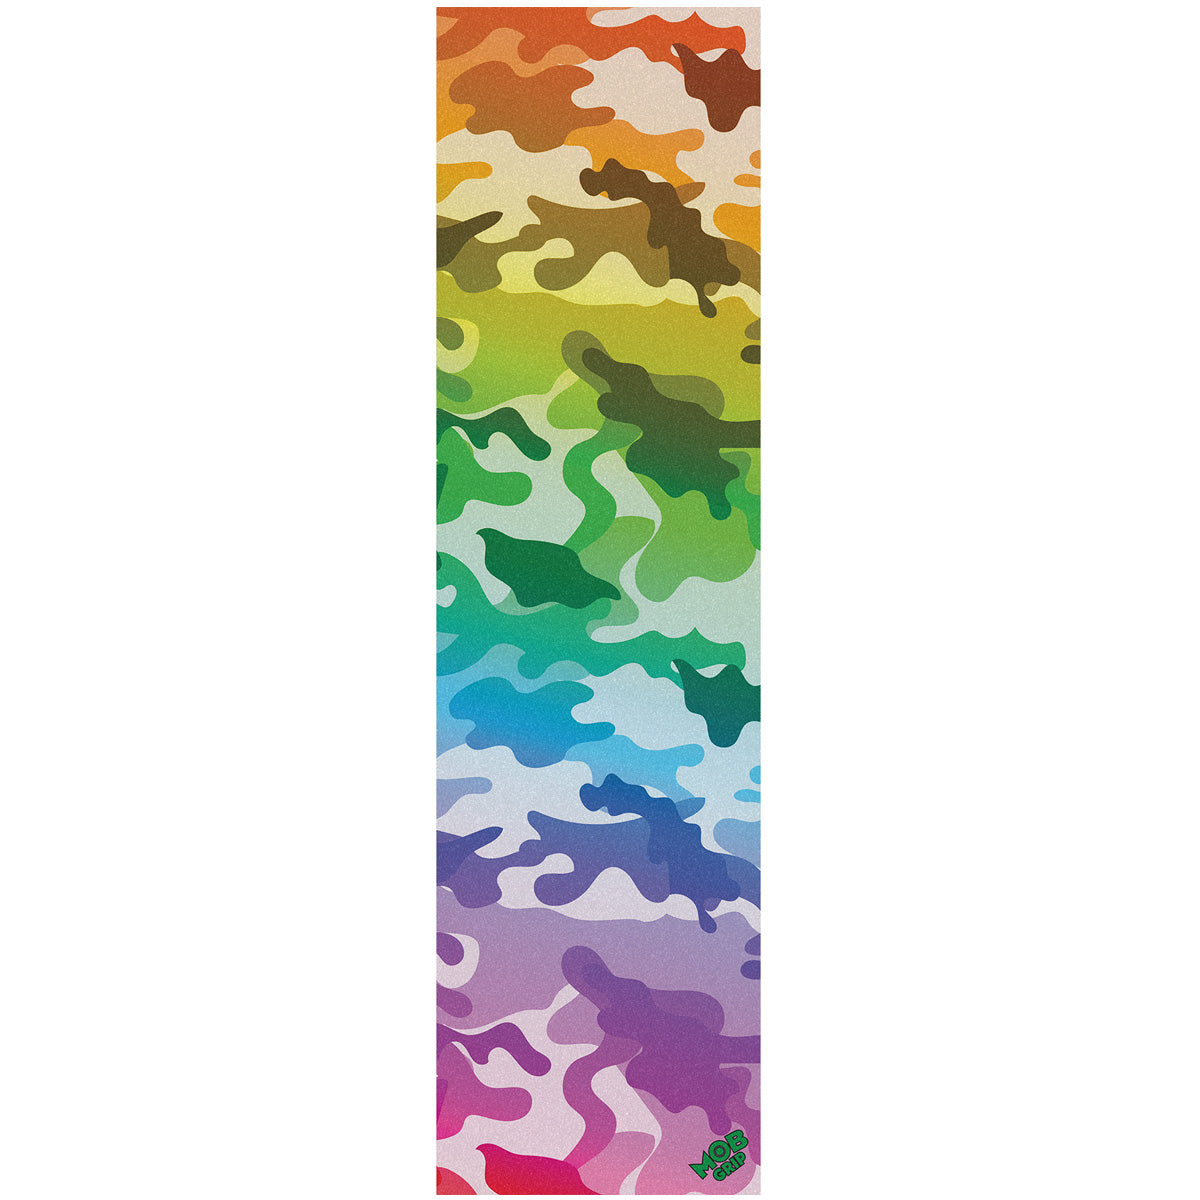 Mob Camo II Grip Tape - Rainbow image 1